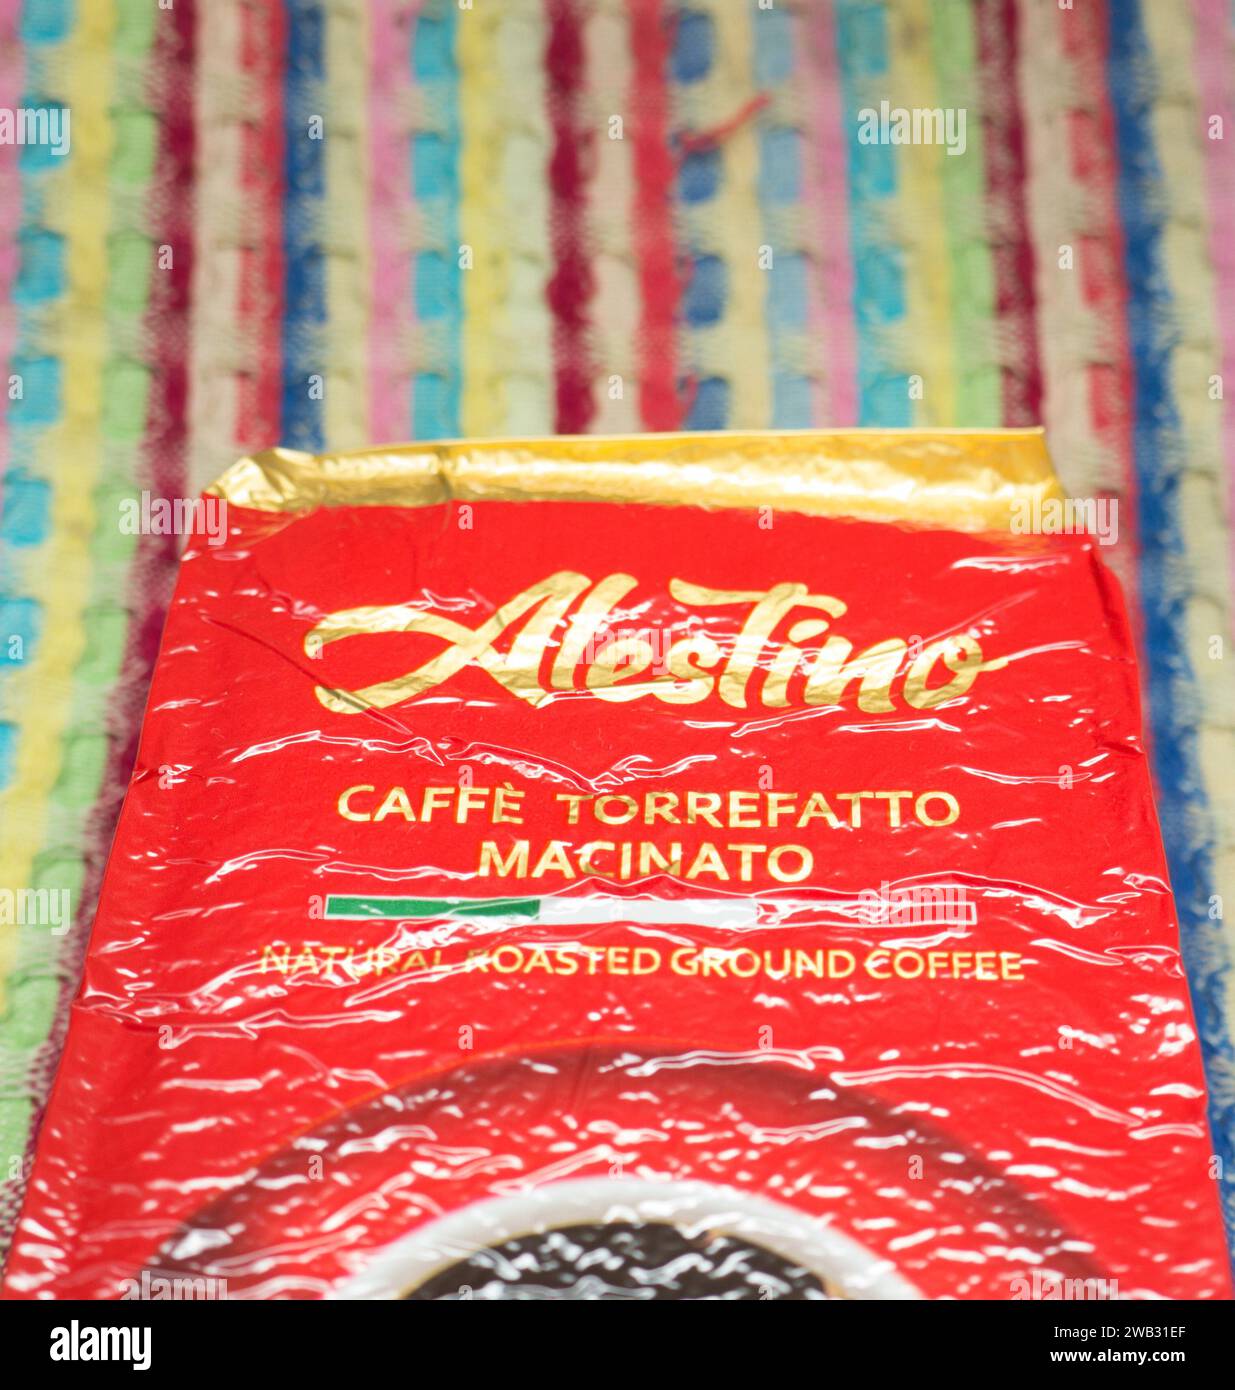 Café Alestino Caffe Torrefatto Macinato. Banque D'Images